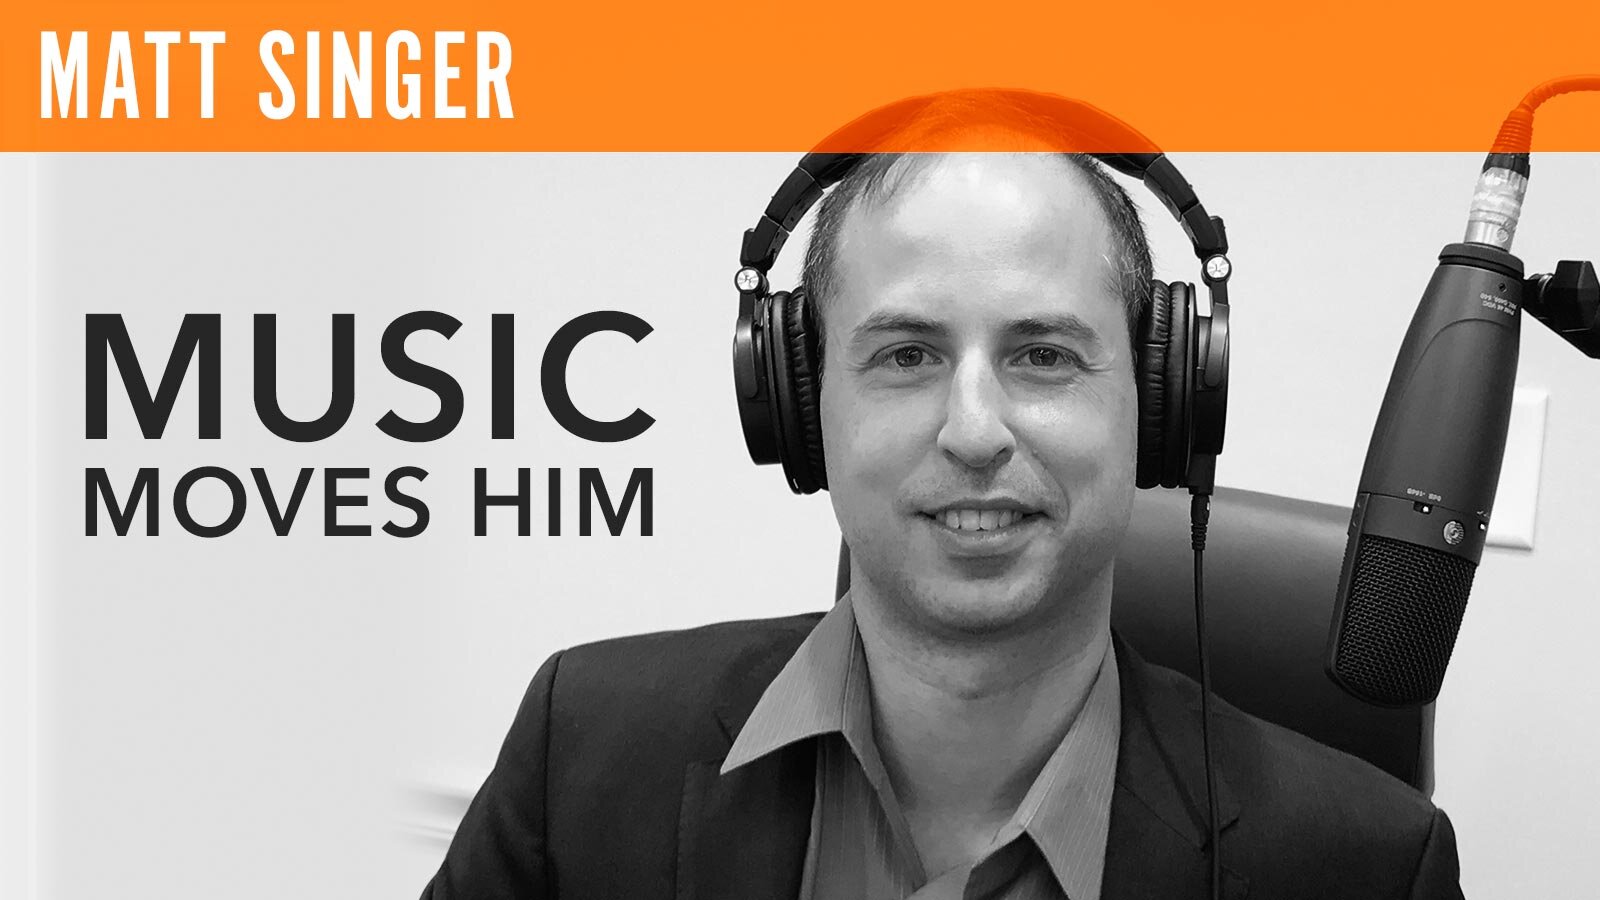 Matt Singer, "Music Moves Him"